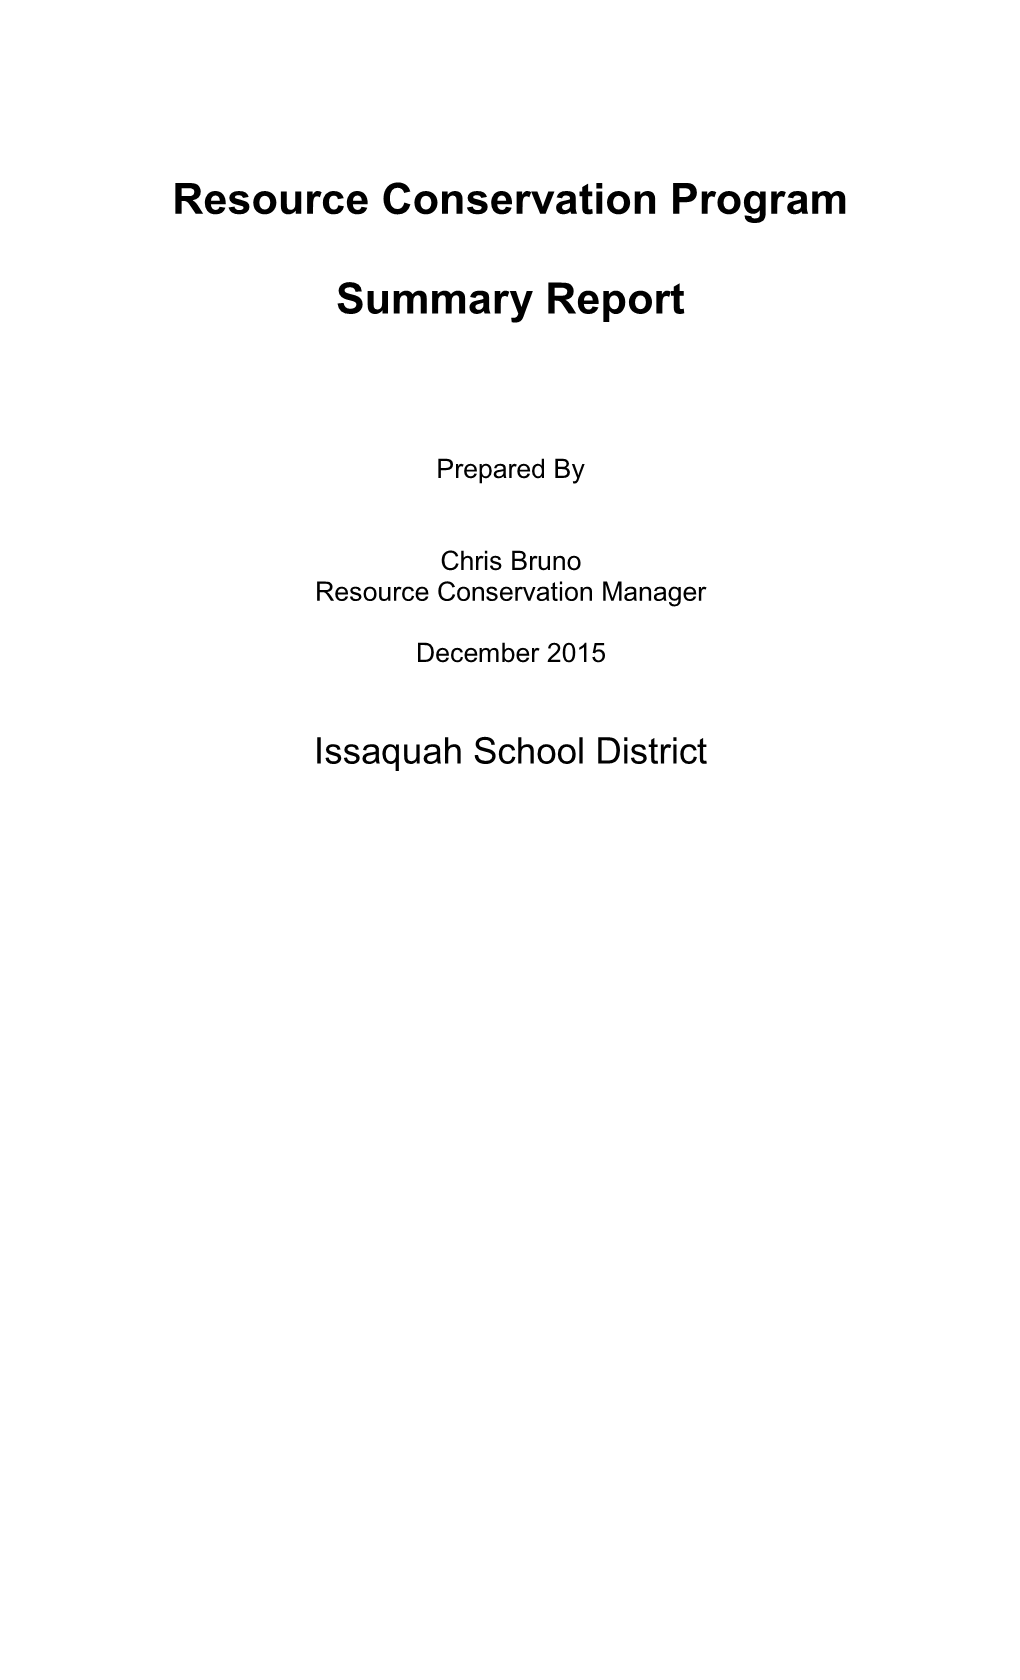 Resource Conservation Program Summary Report